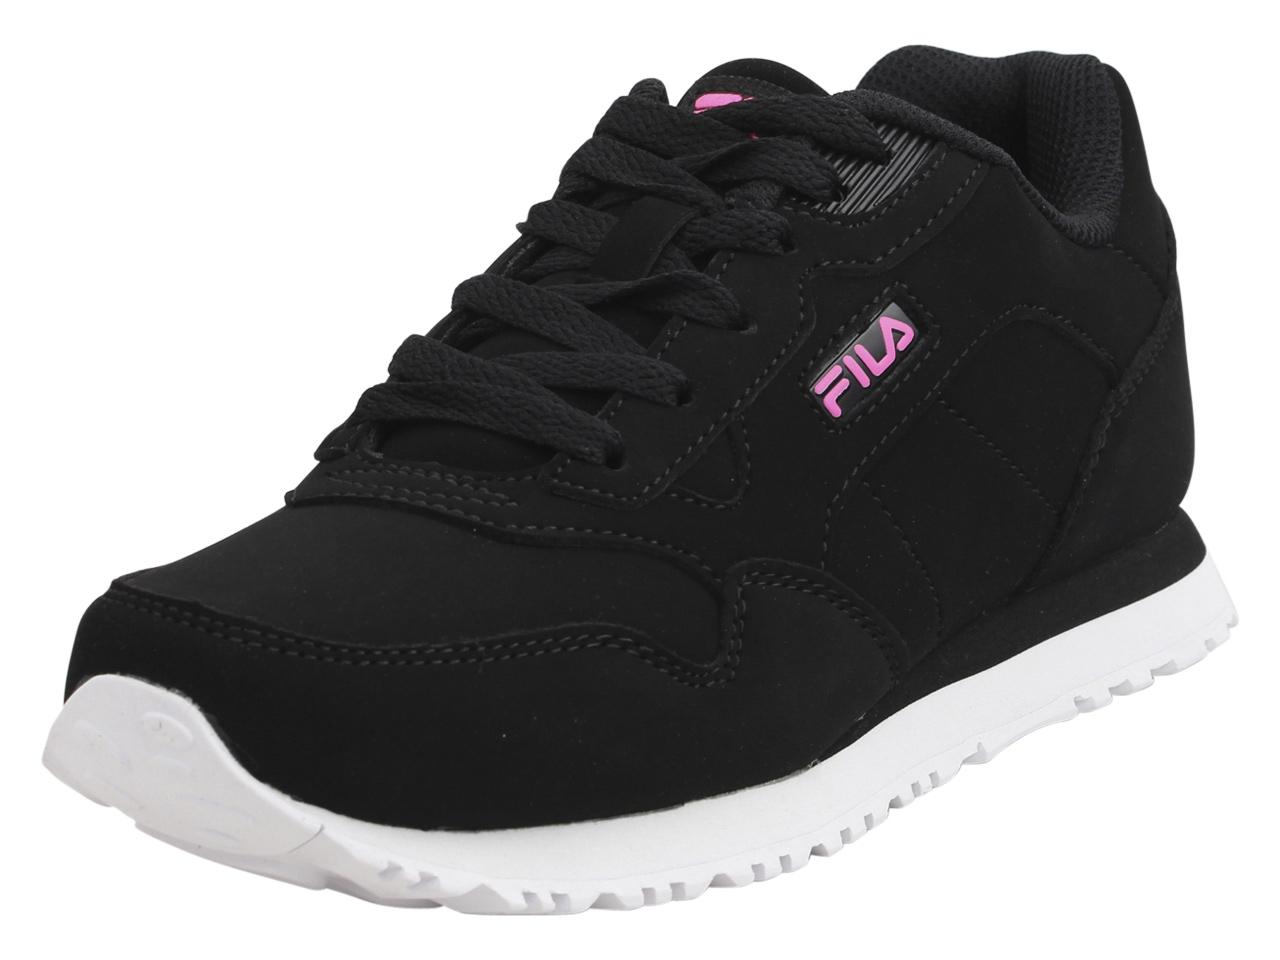 Fila Women's Cress Sneakers Shoes - Black/Knock Out Pink/White - 9 B(M) US